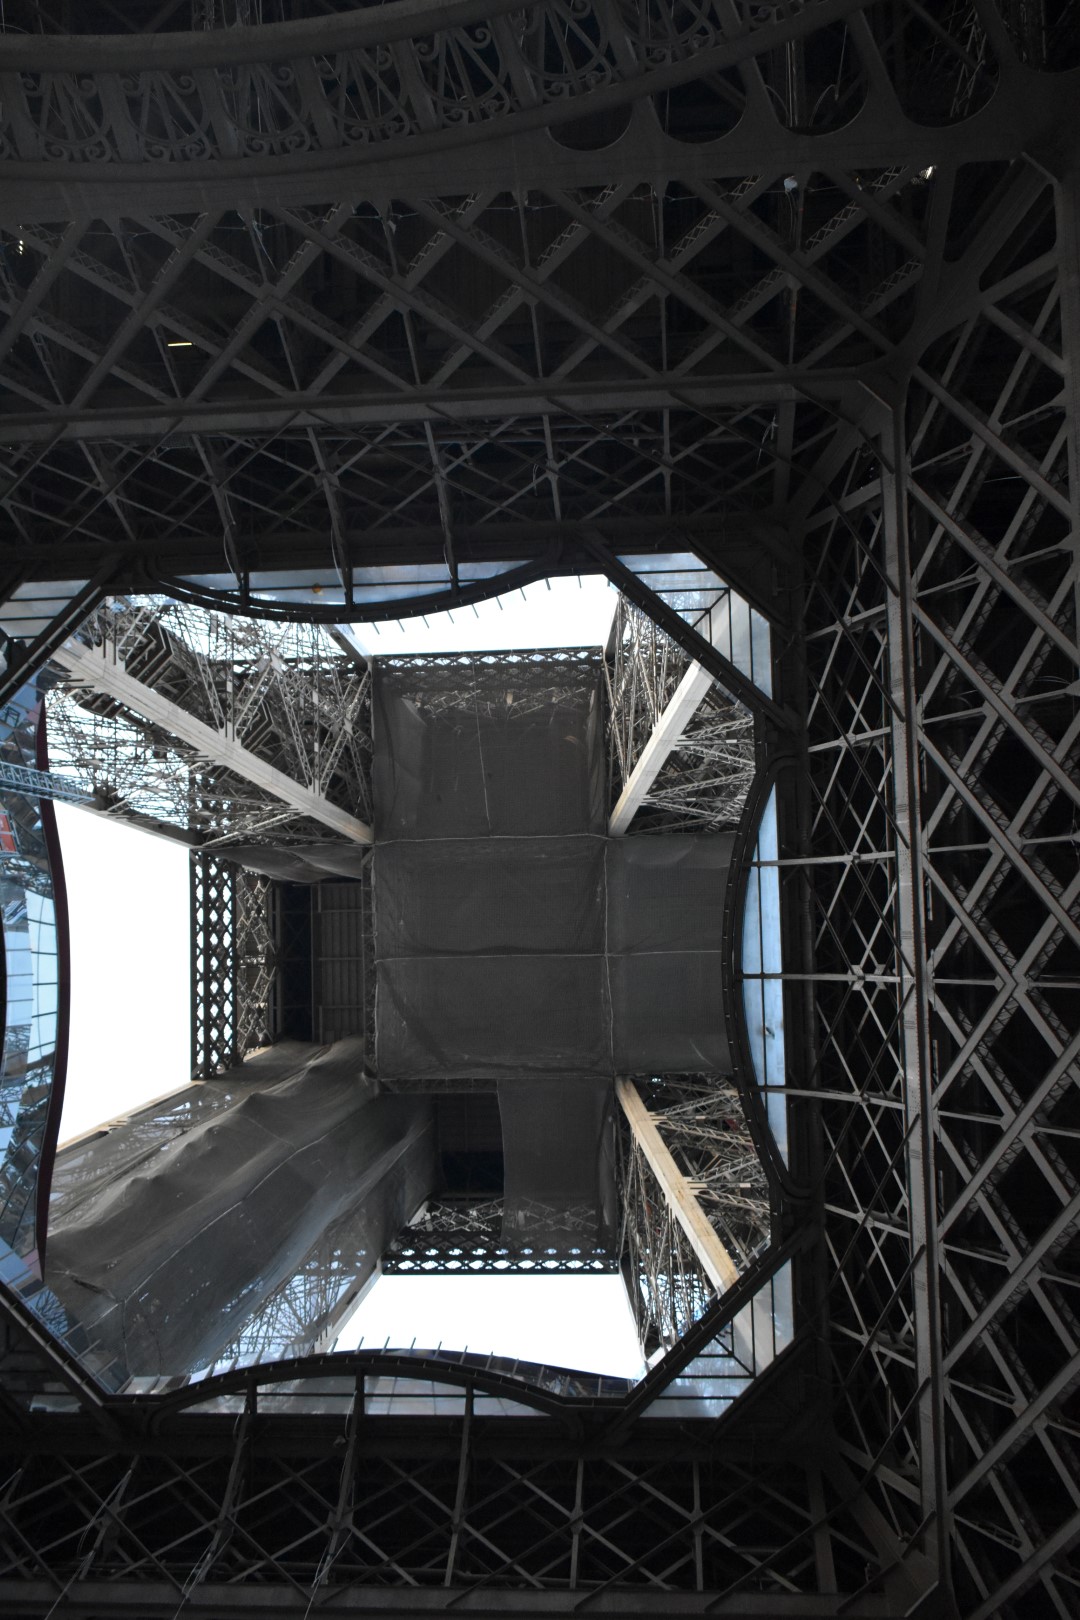 Bottom of the Eiffel Tower, Champ de Mars, Paris